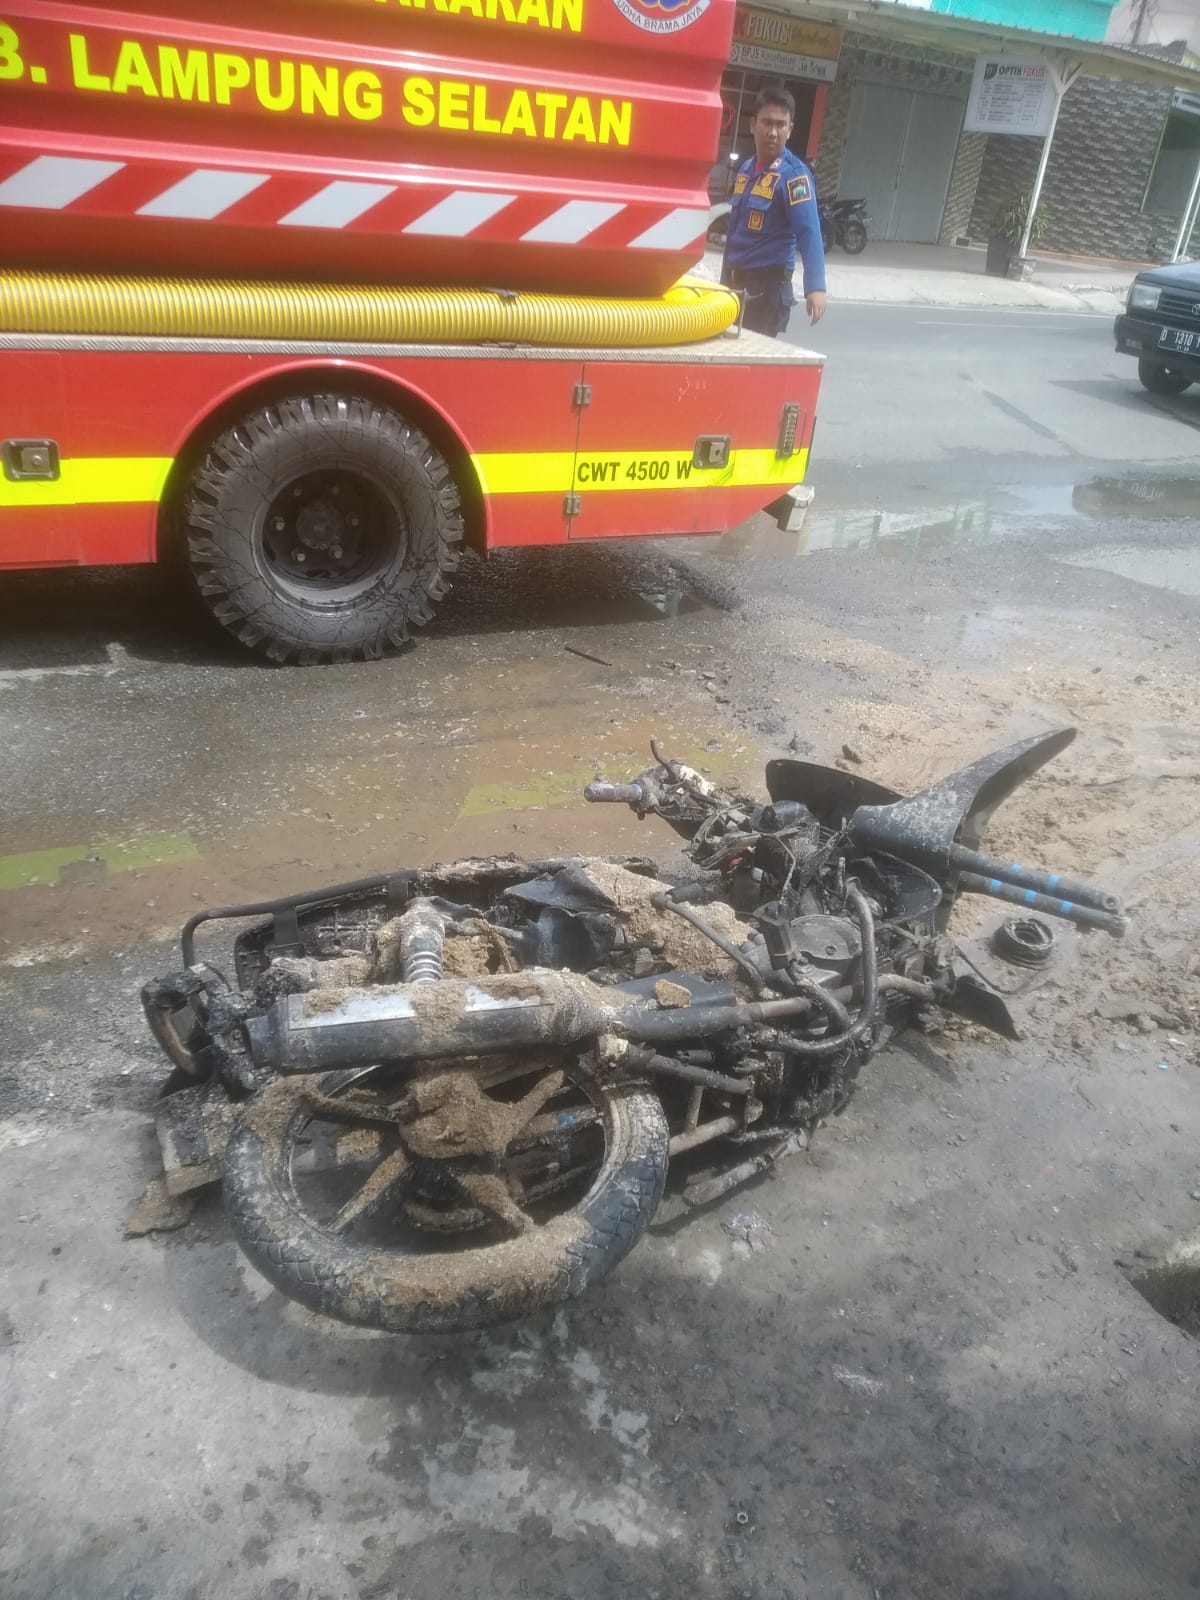 Hanya Itungan Menit, Tim Rescue Damkarmat Lamsel Berhasil Padamkan Api Yang Membakar Motor Jenis Suzuki